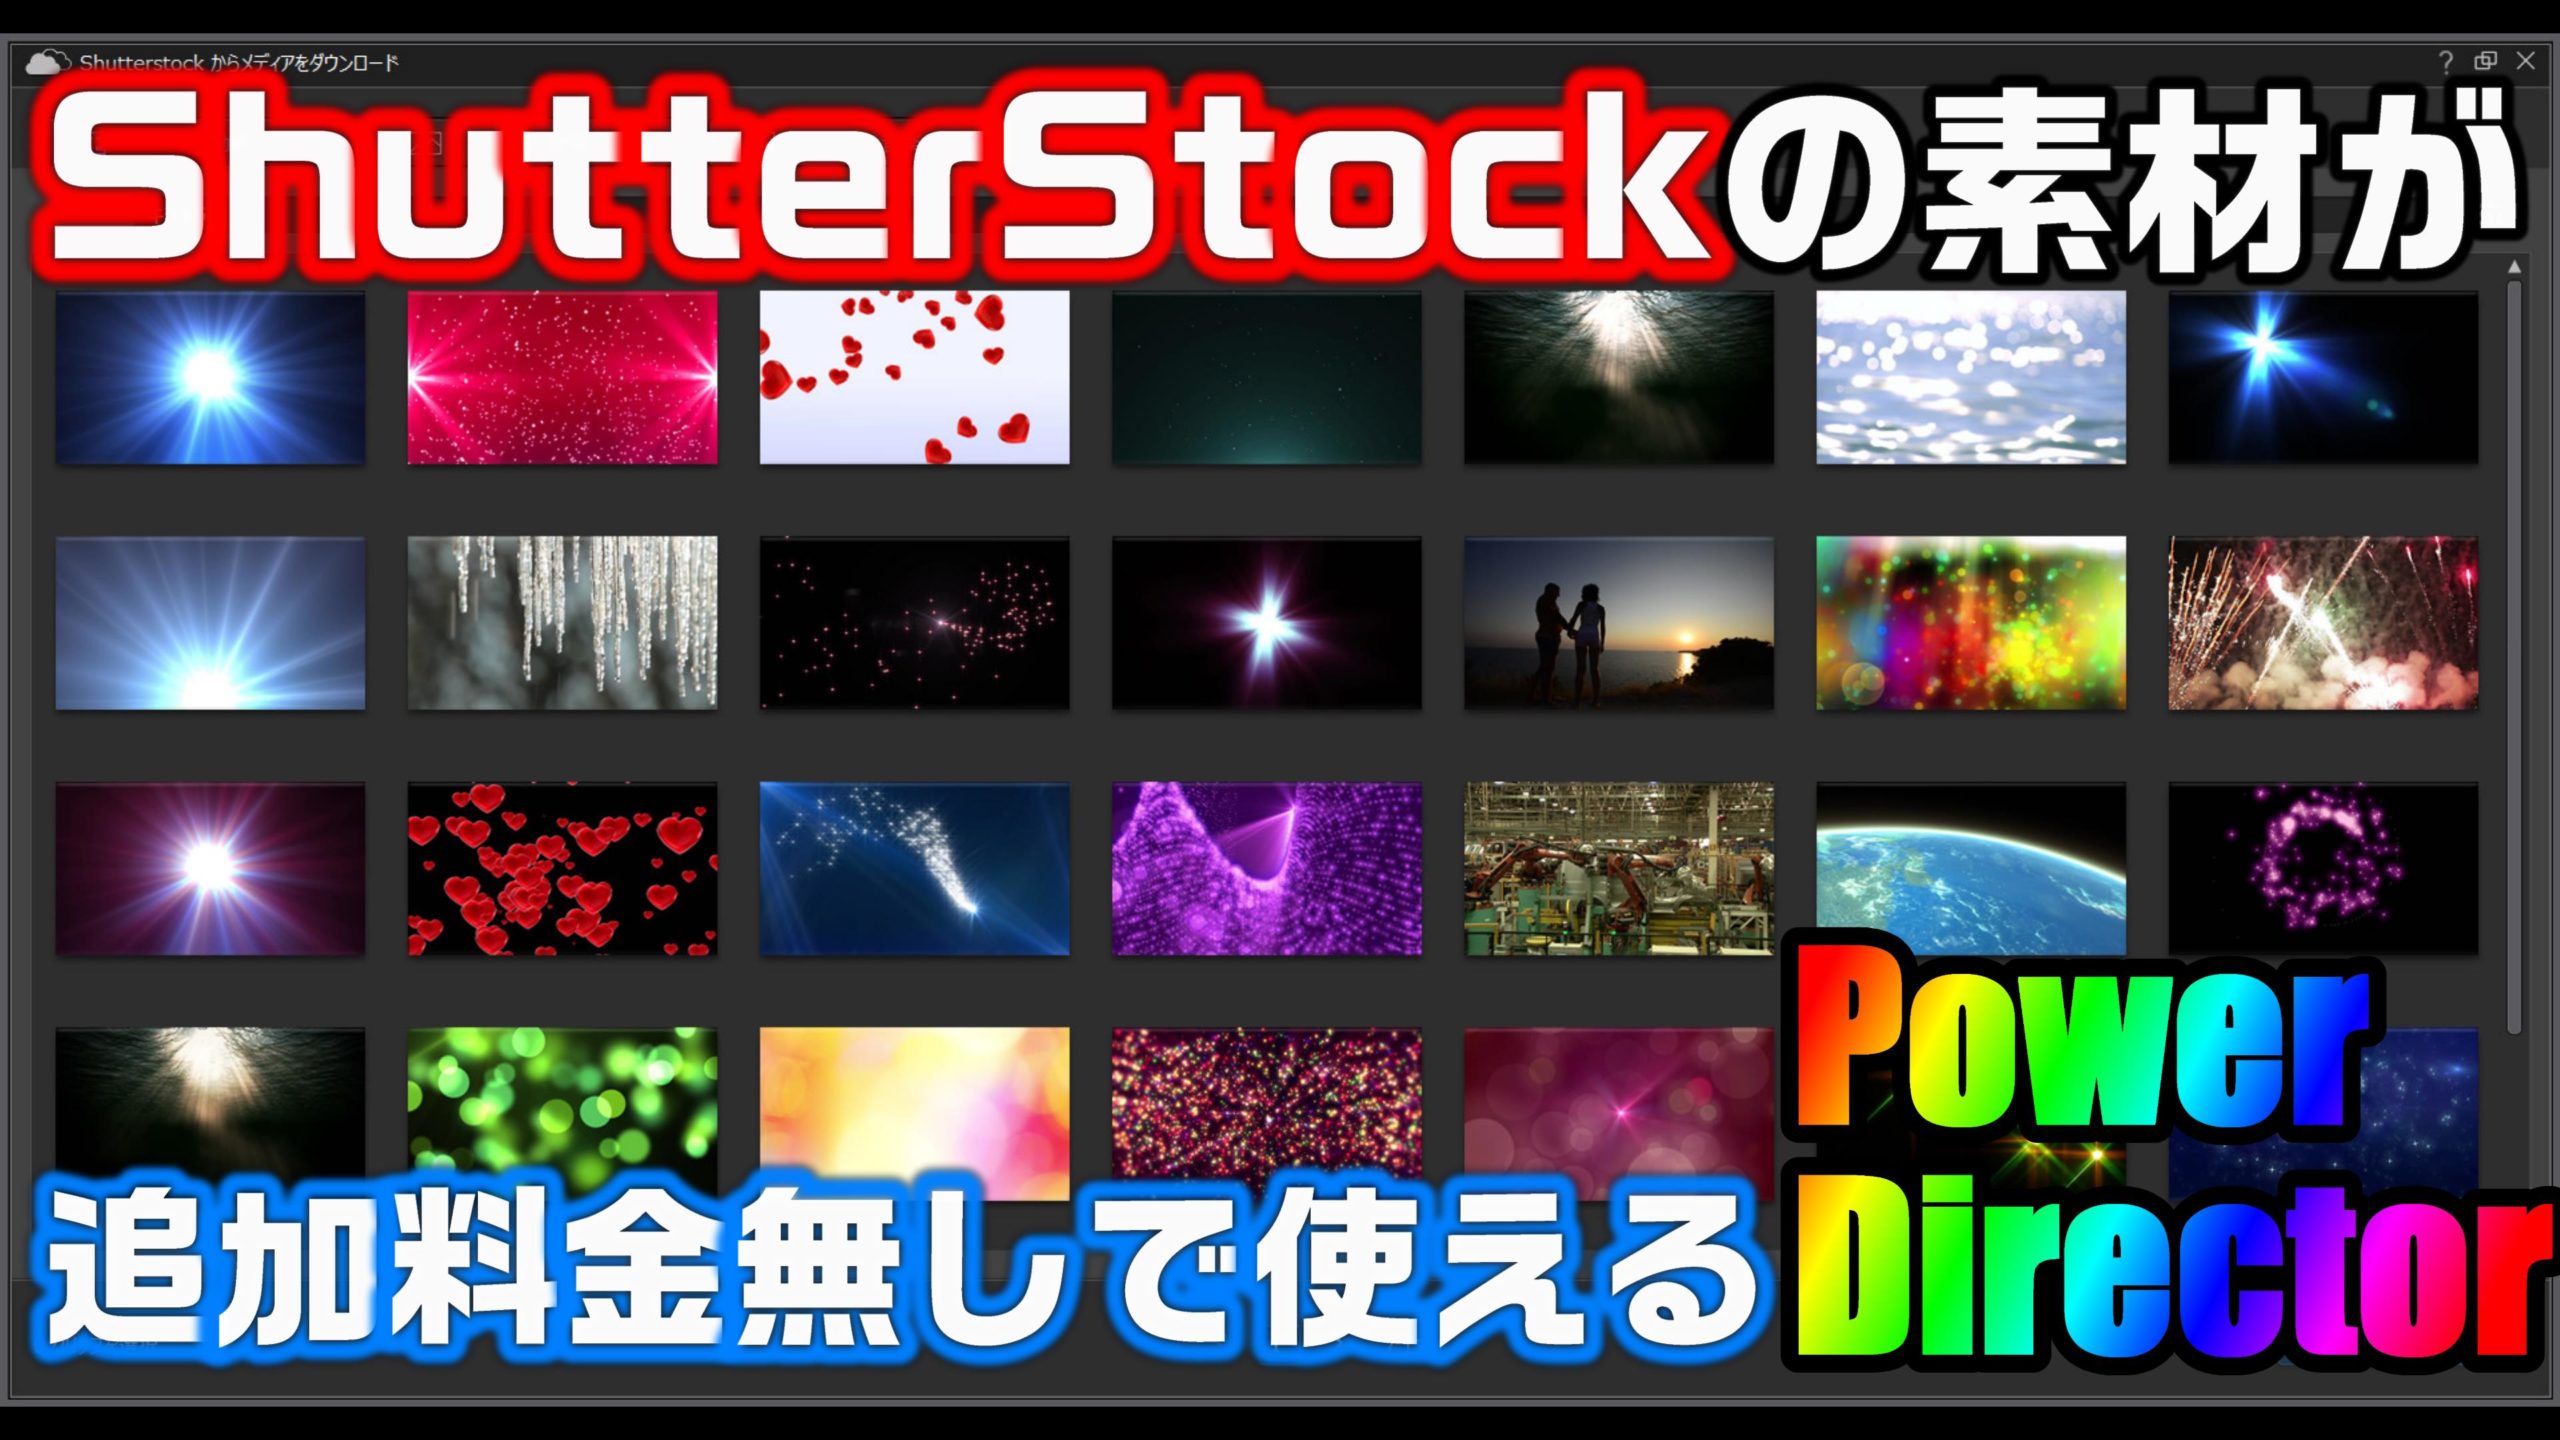 Shutterstockの素材をダウンロードして使い放題 Powerdirector365で 動画編集を楽しもう 動画編集のススメ